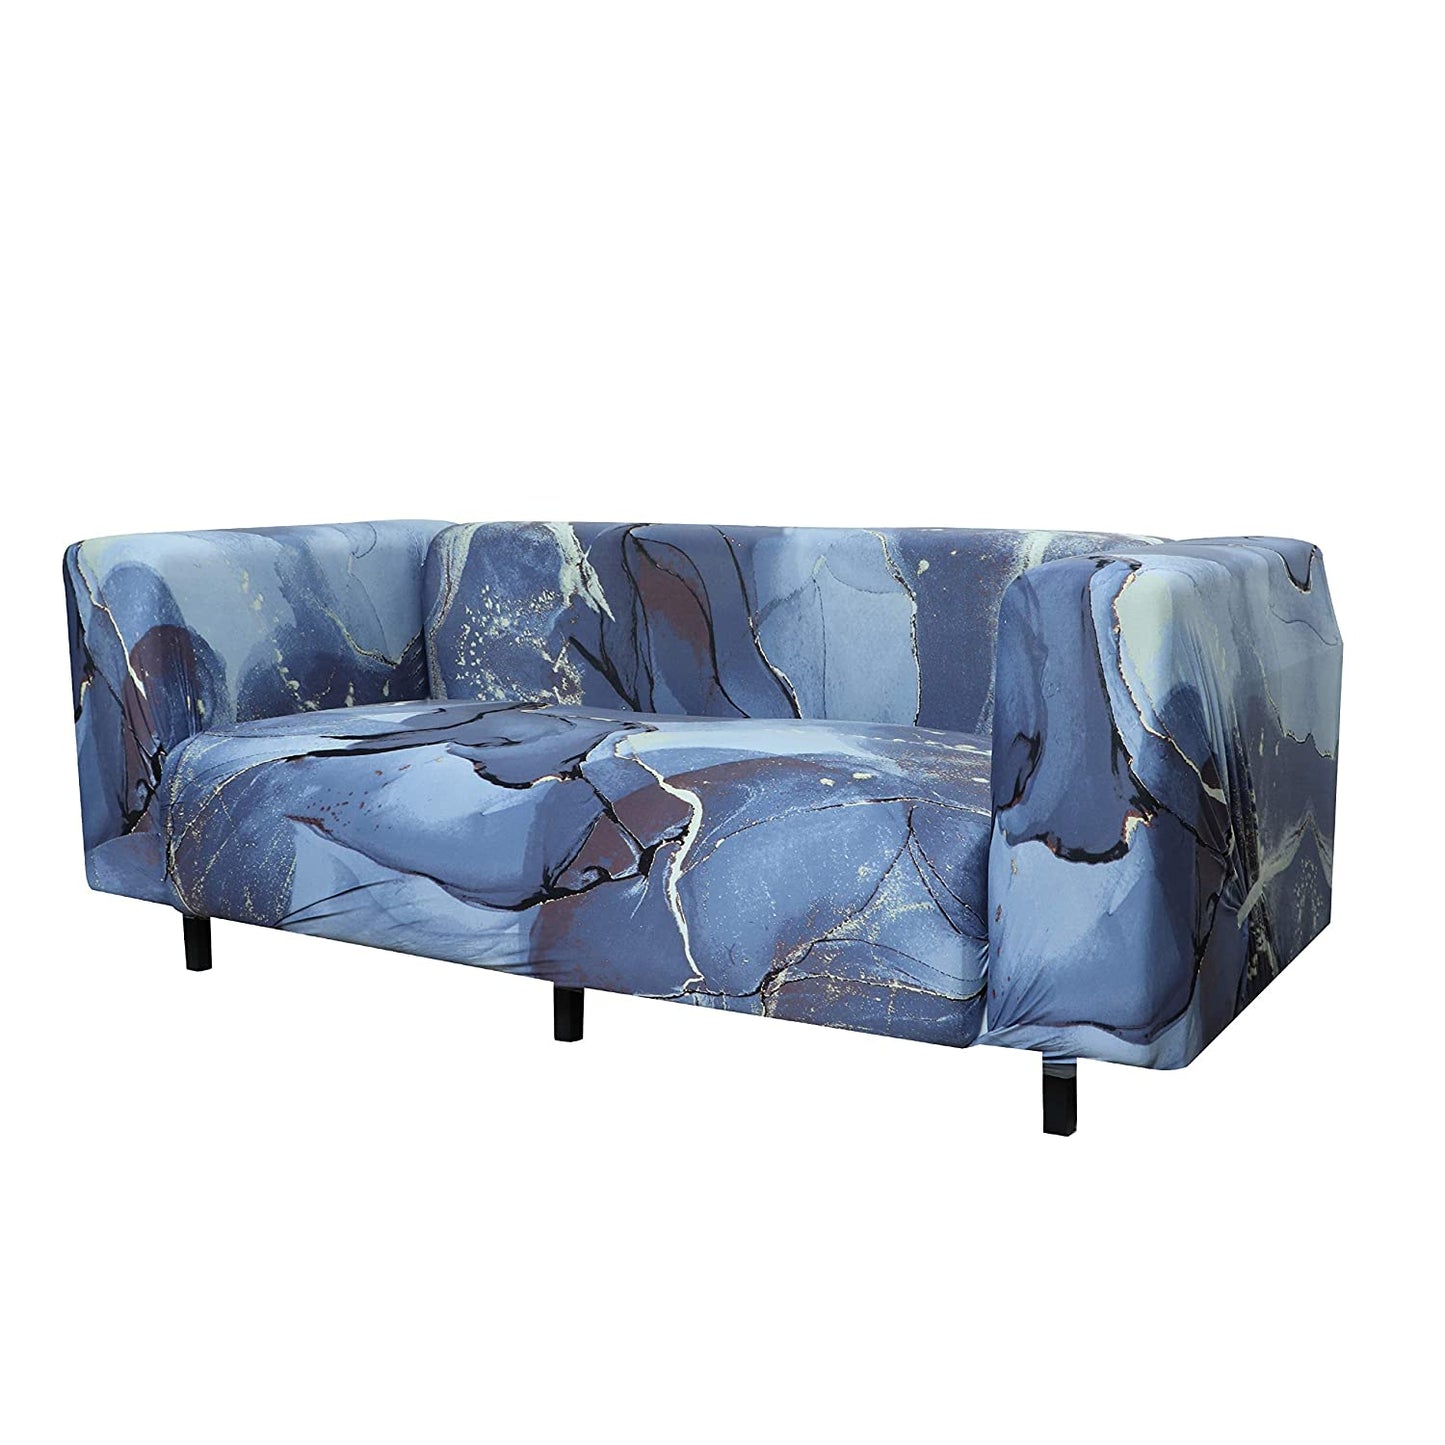 Magic Sofa Covers : Slip Covers for your sofa